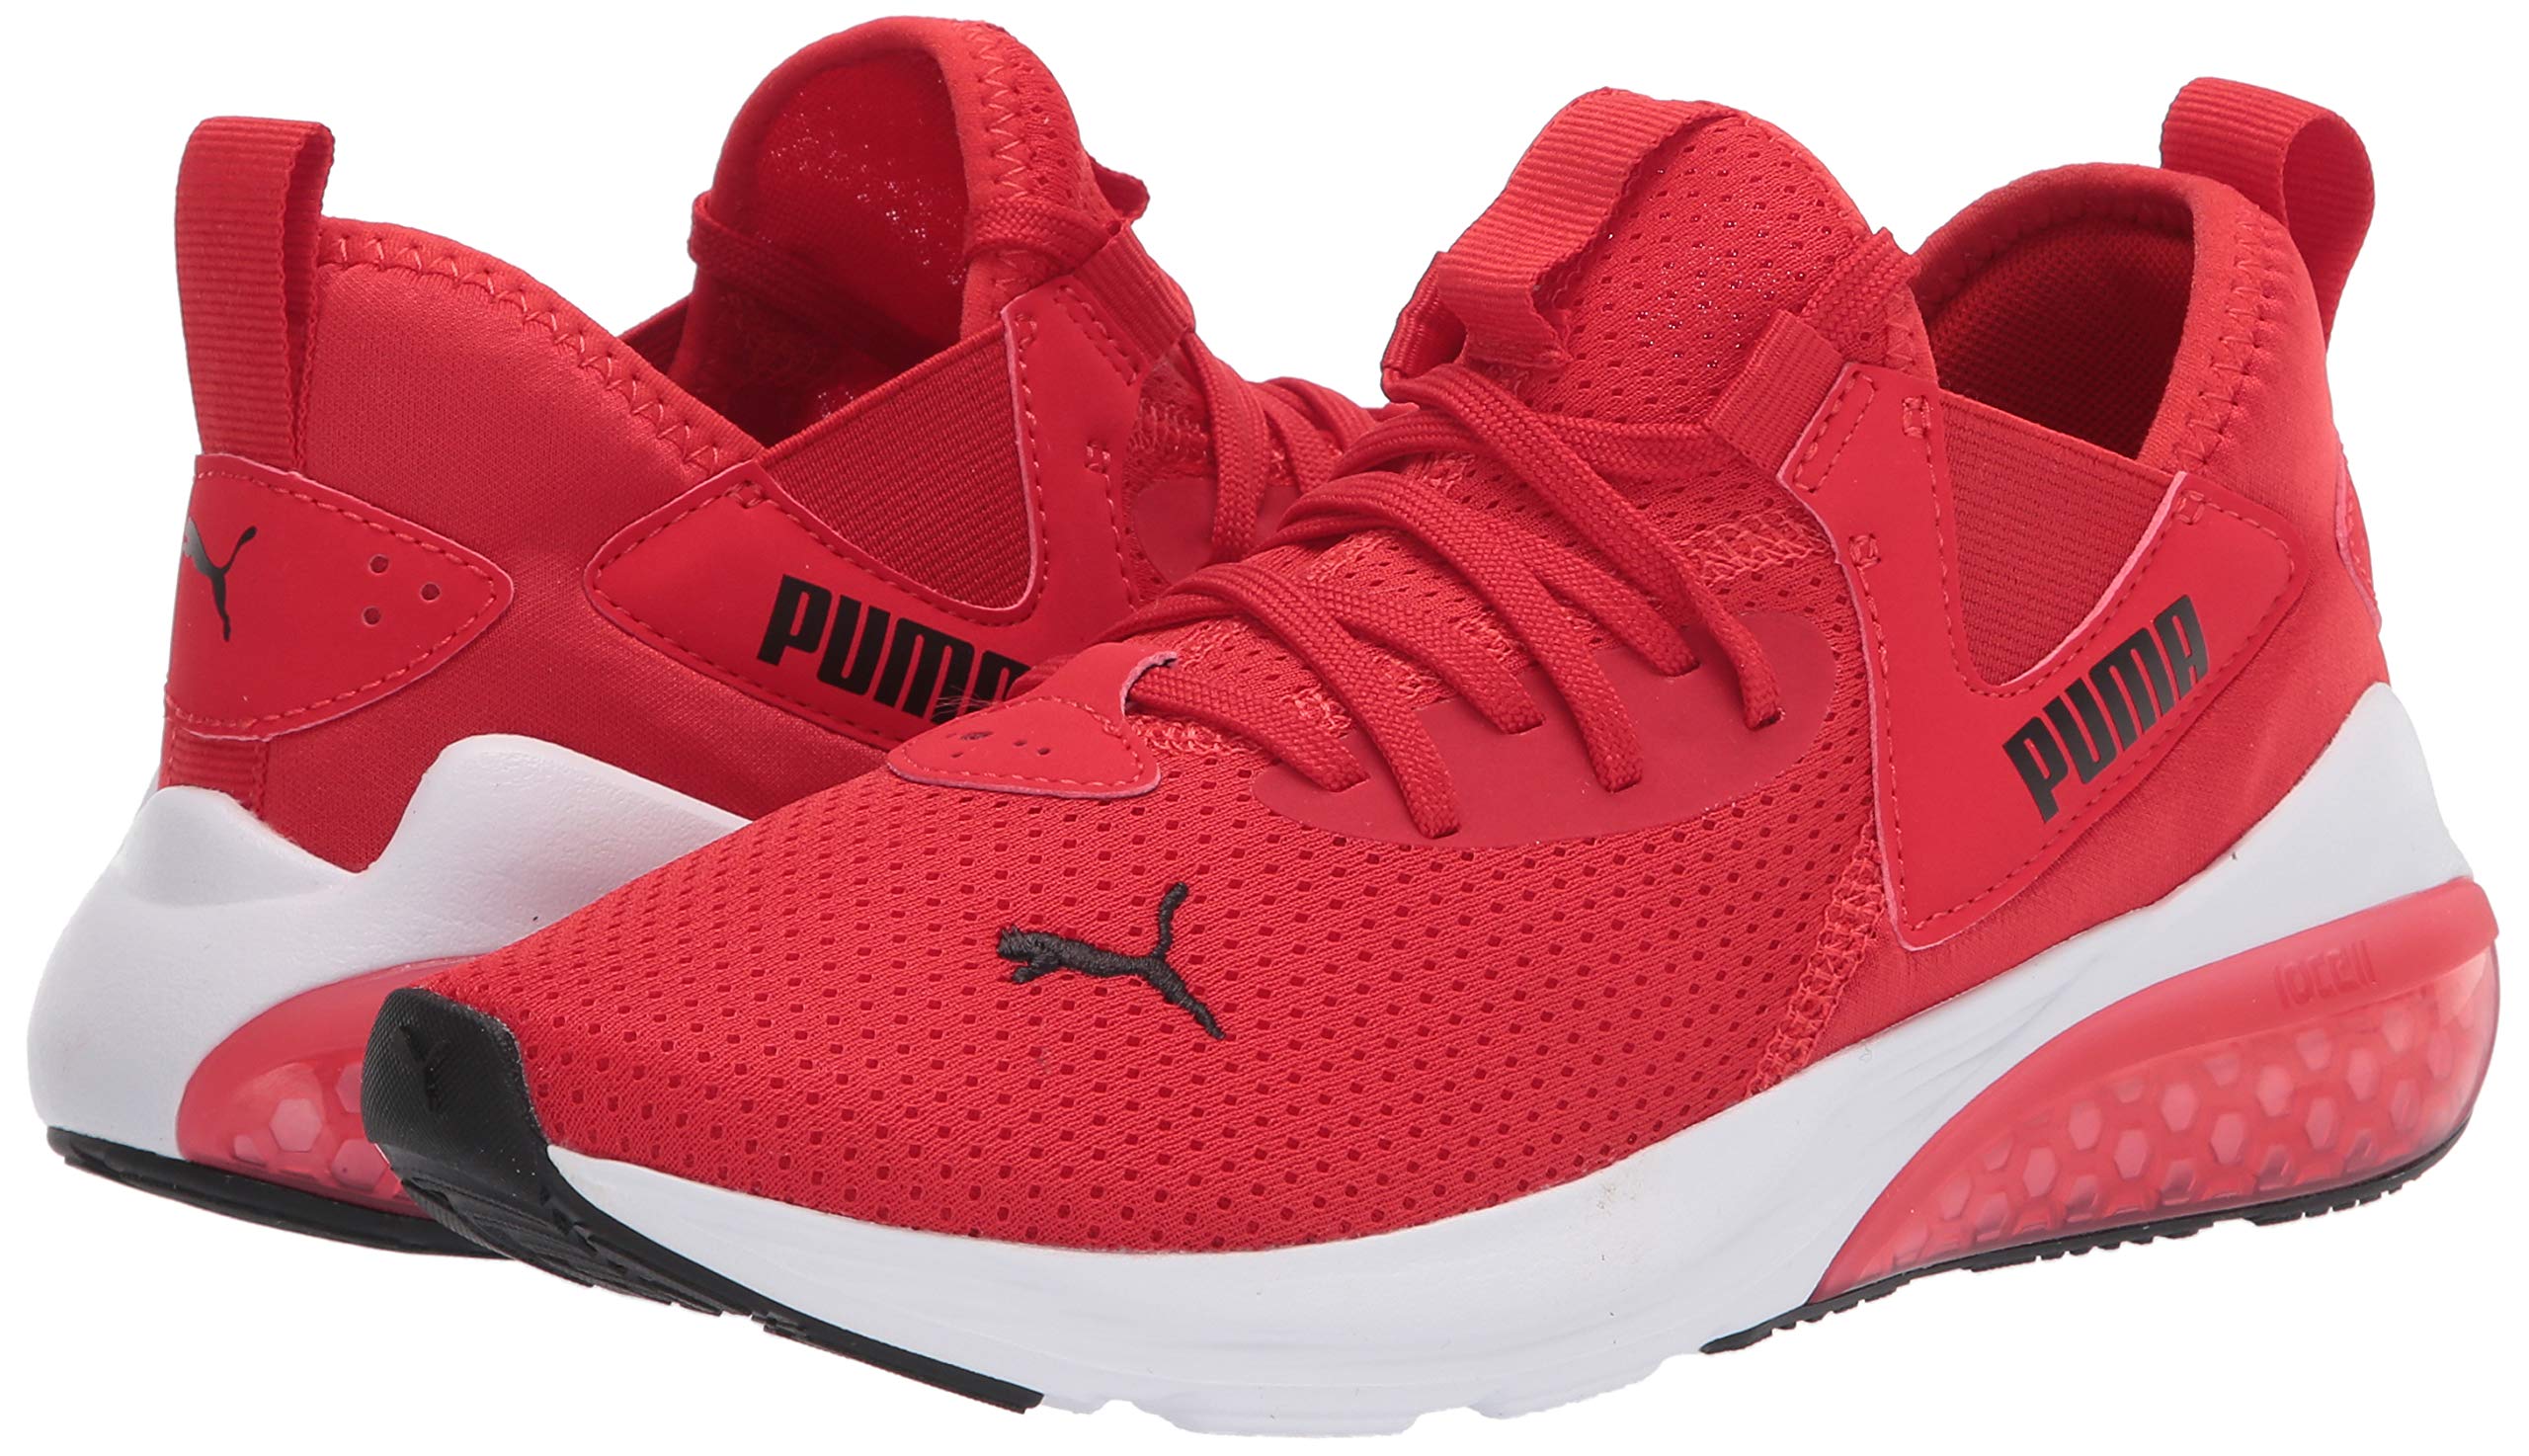 PUMA Cell Vive Running Shoe, High Risk Red Black, 2 US Unisex Little Kid